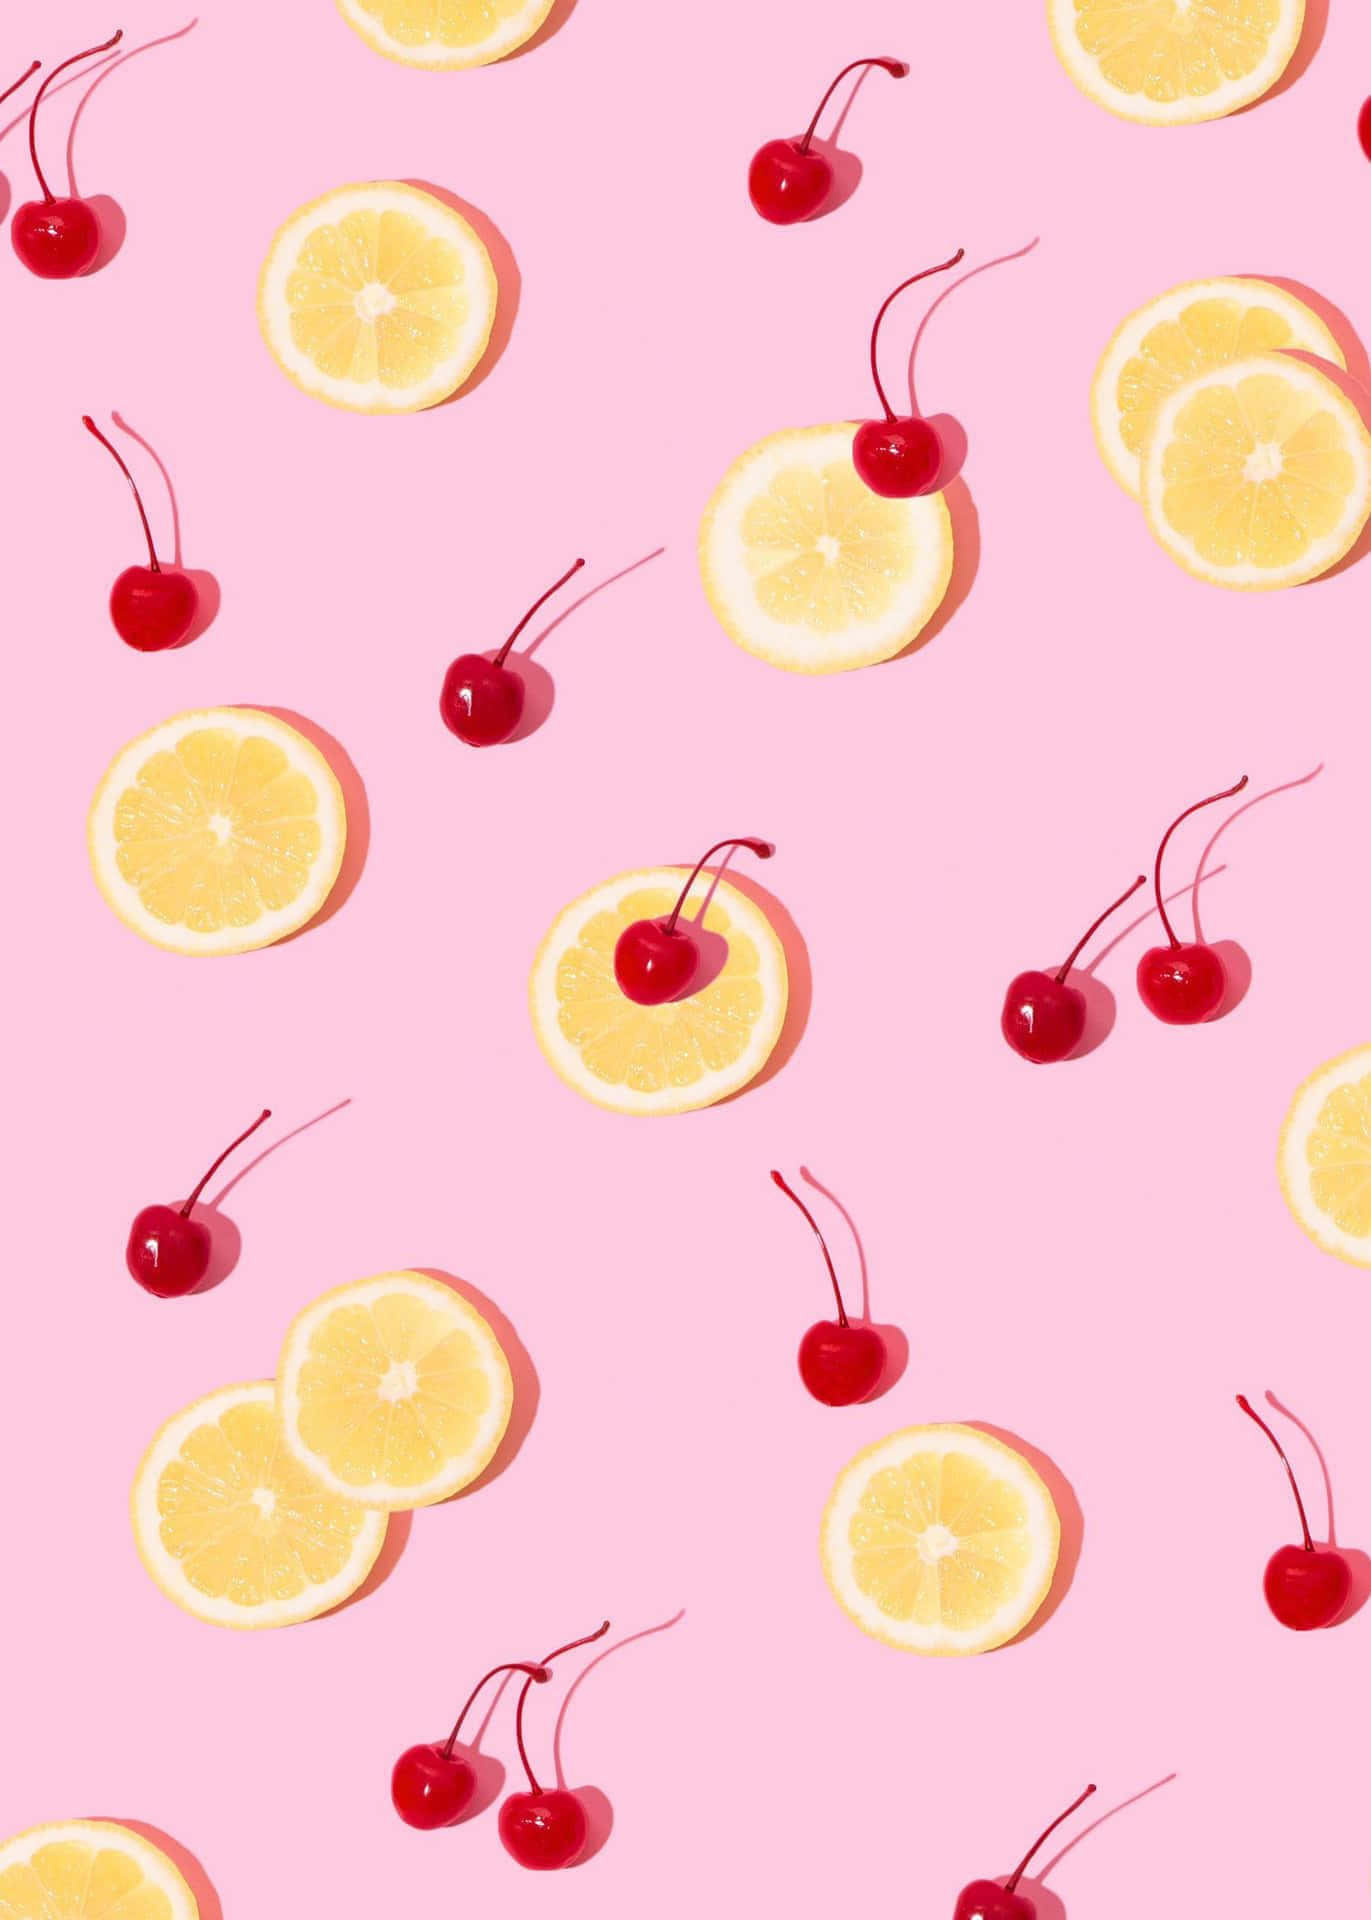 Lemonand Cherries Patternon Pink Background